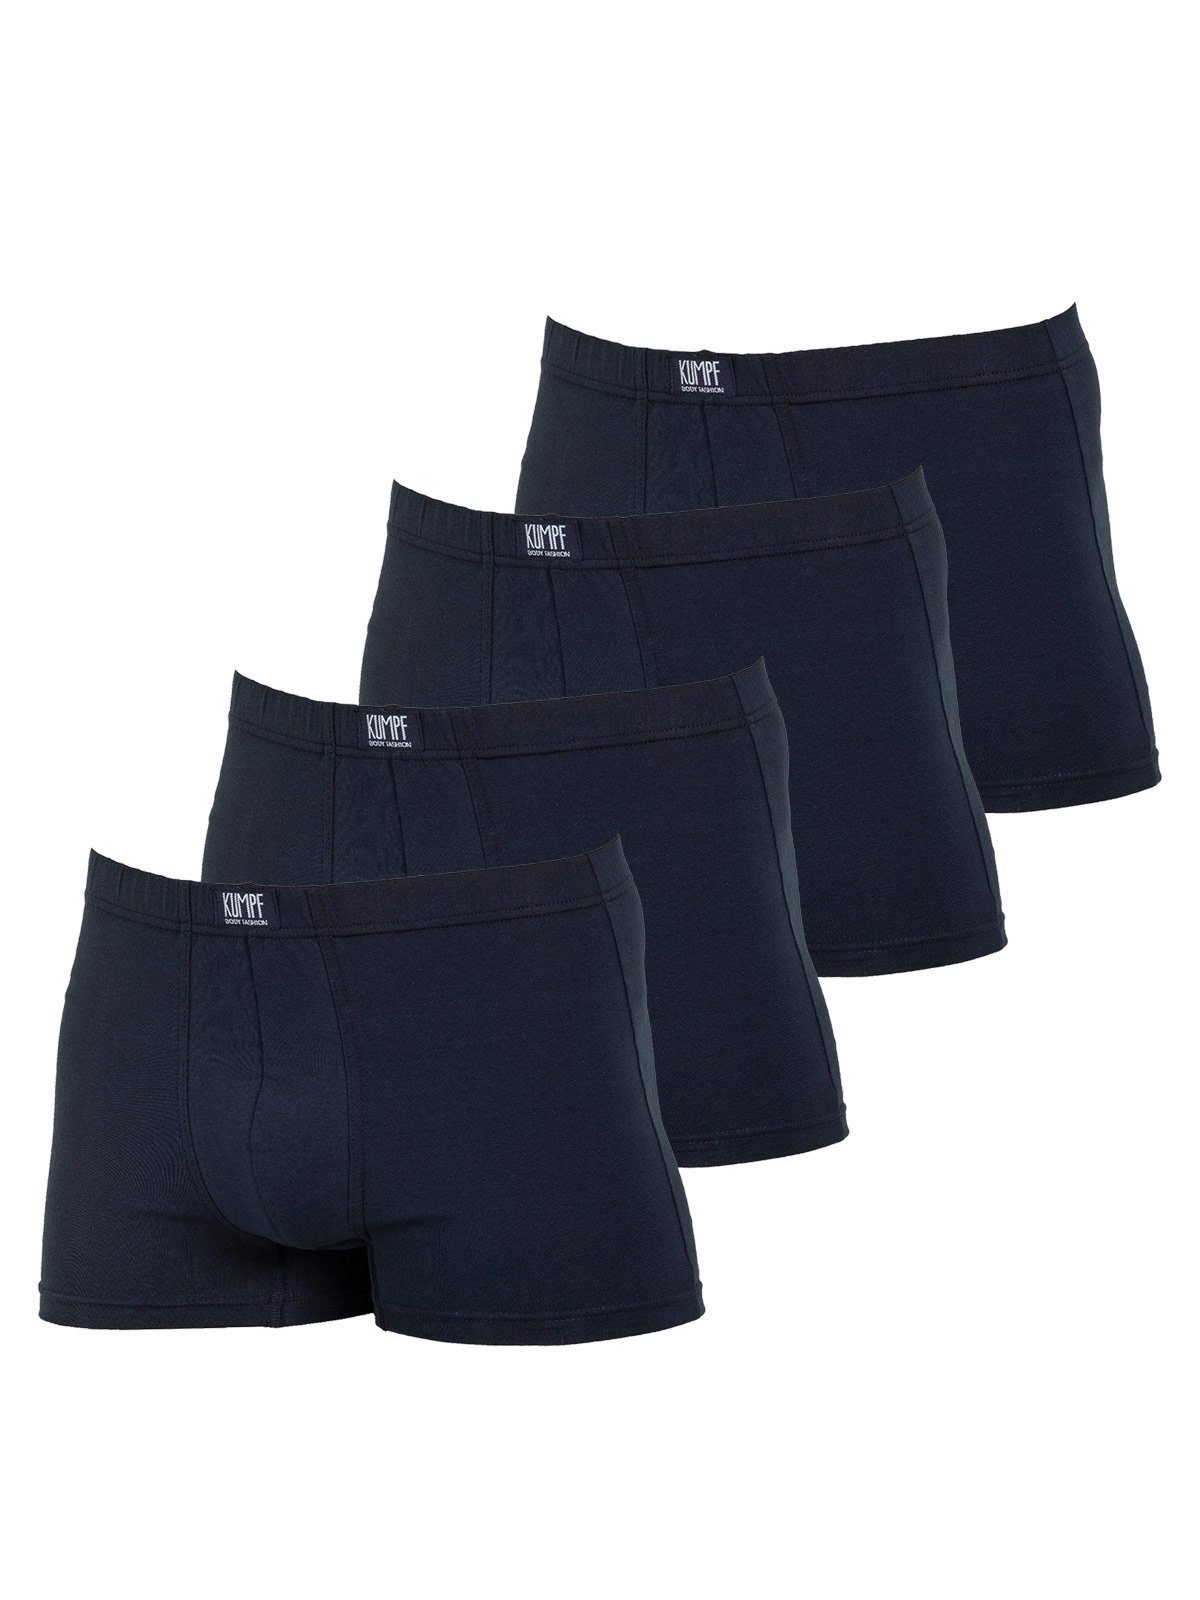 KUMPF Retro Pants 4er Sparpack Herren Pants Bio Cotton (Spar-Set, 4-St) hohe Markenqualität navy navy